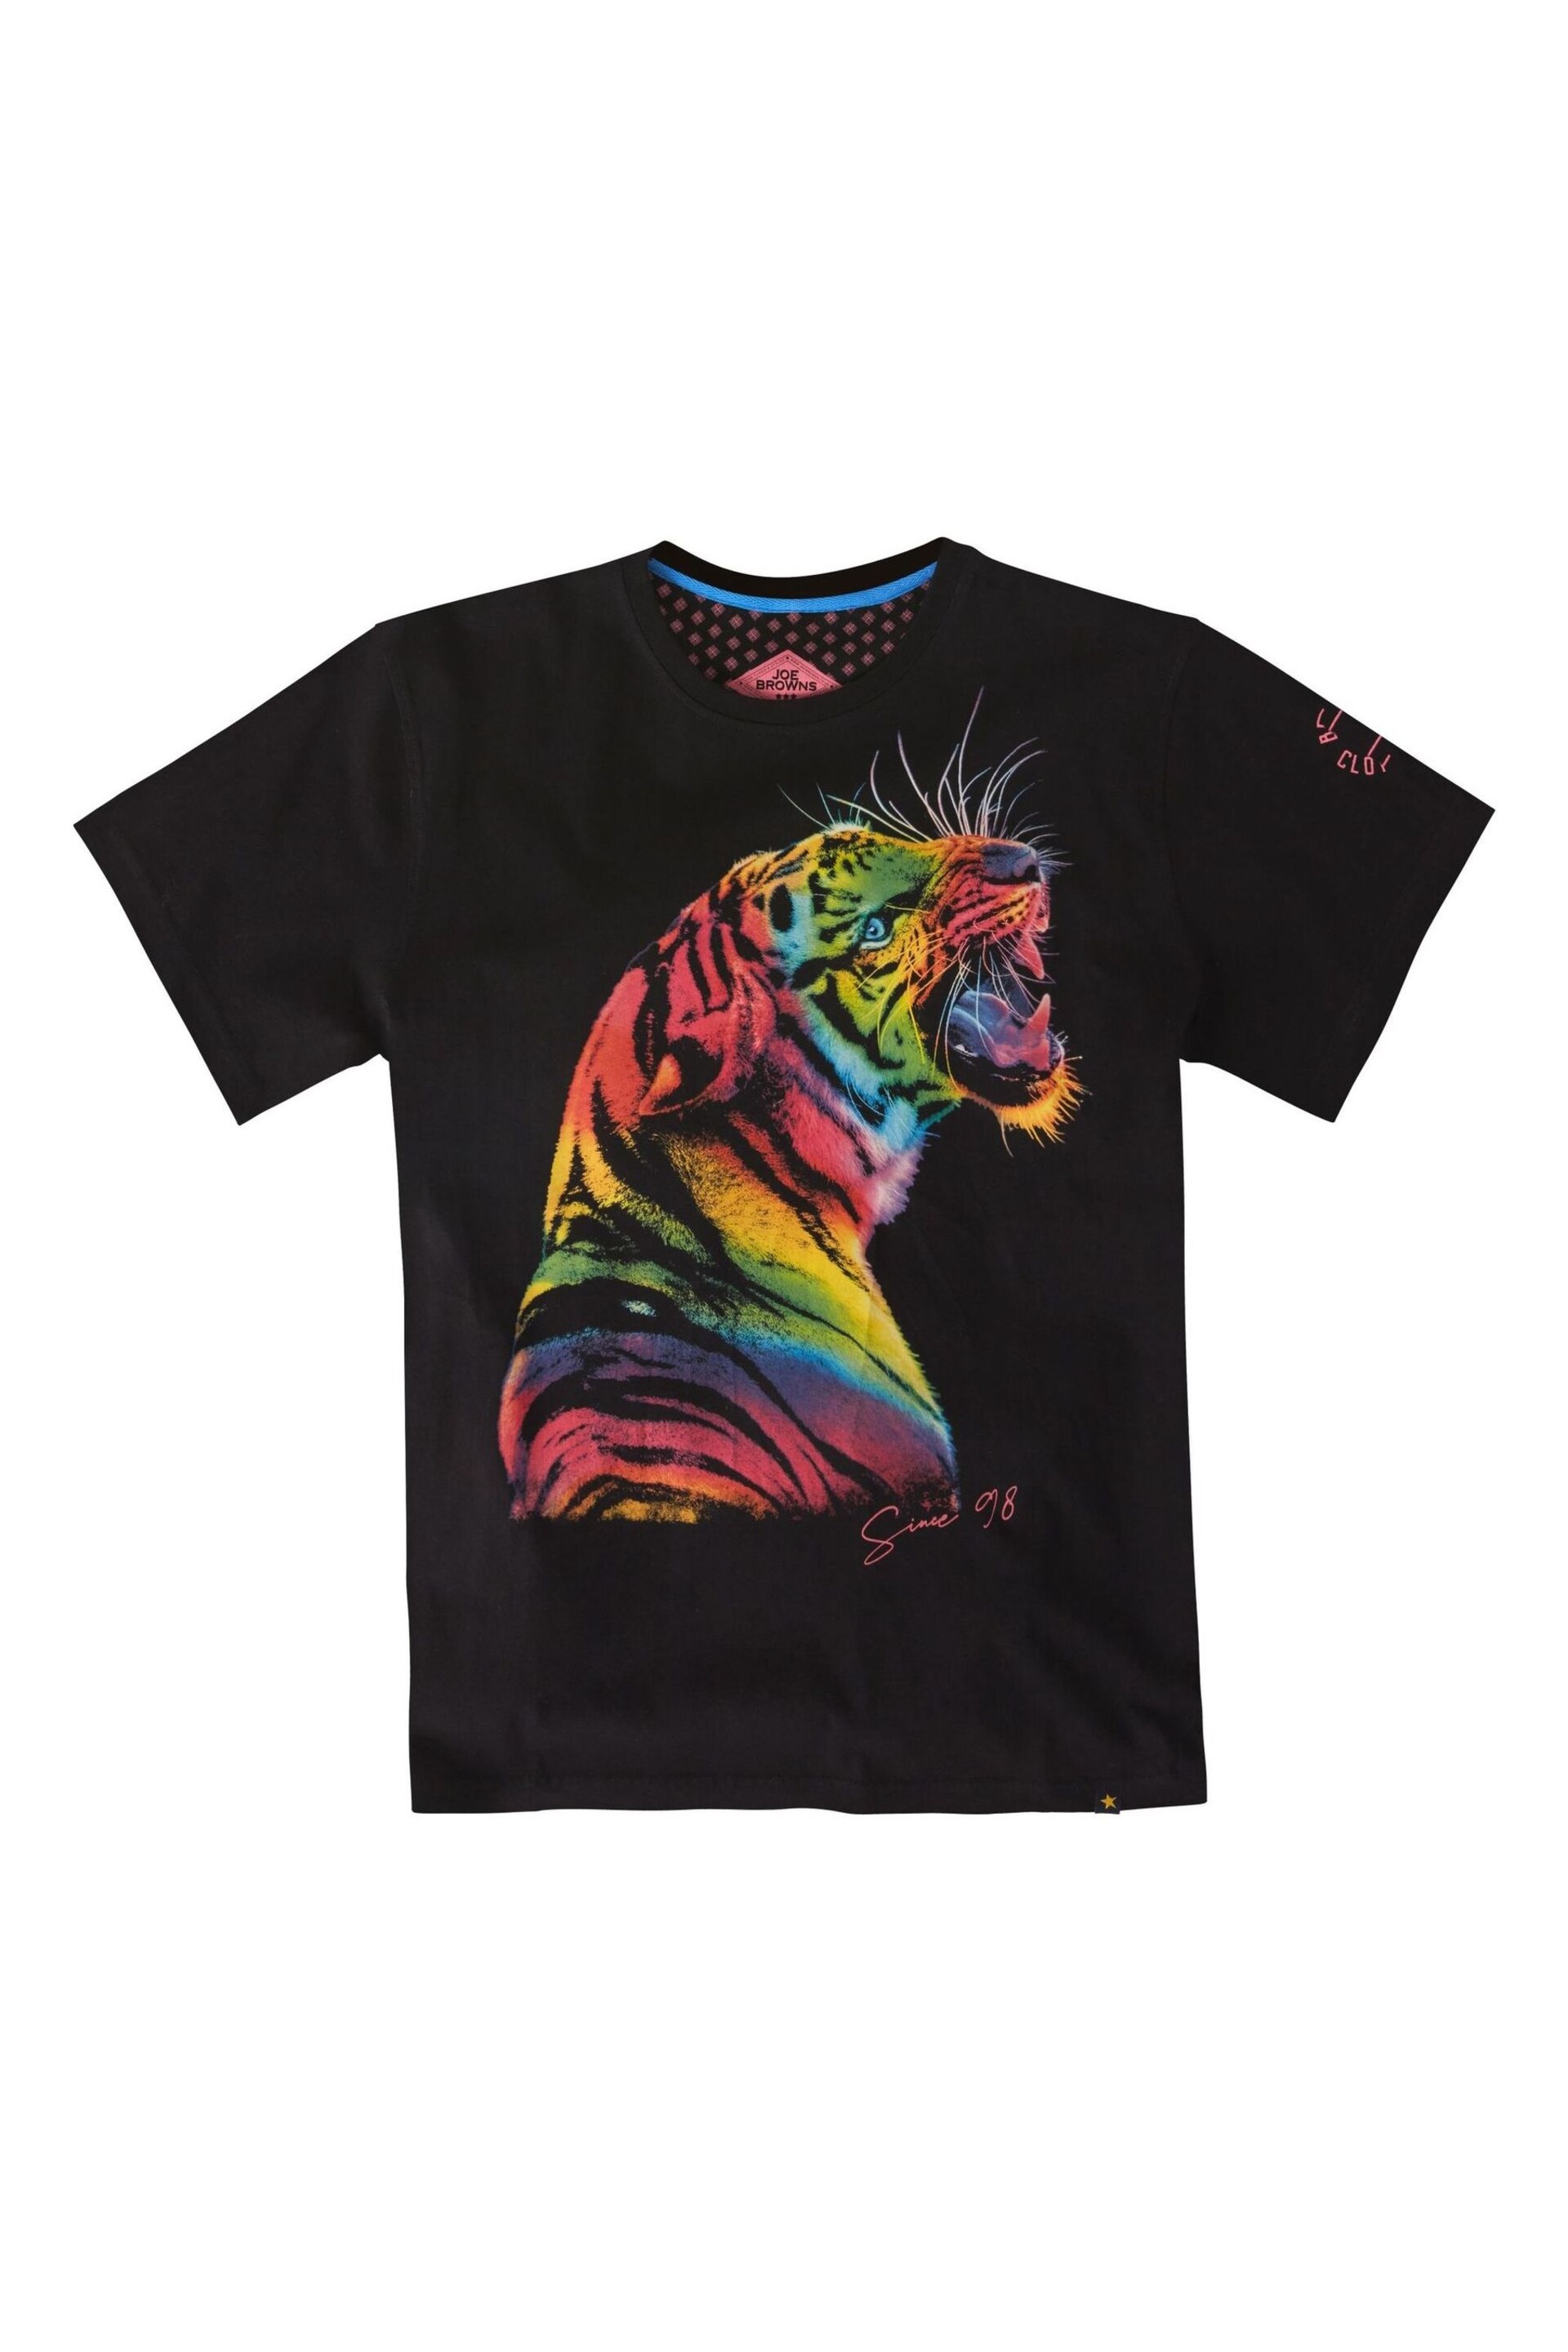 Joe Browns Black Neon Tiger Graphic T-Shirt - Image 5 of 5